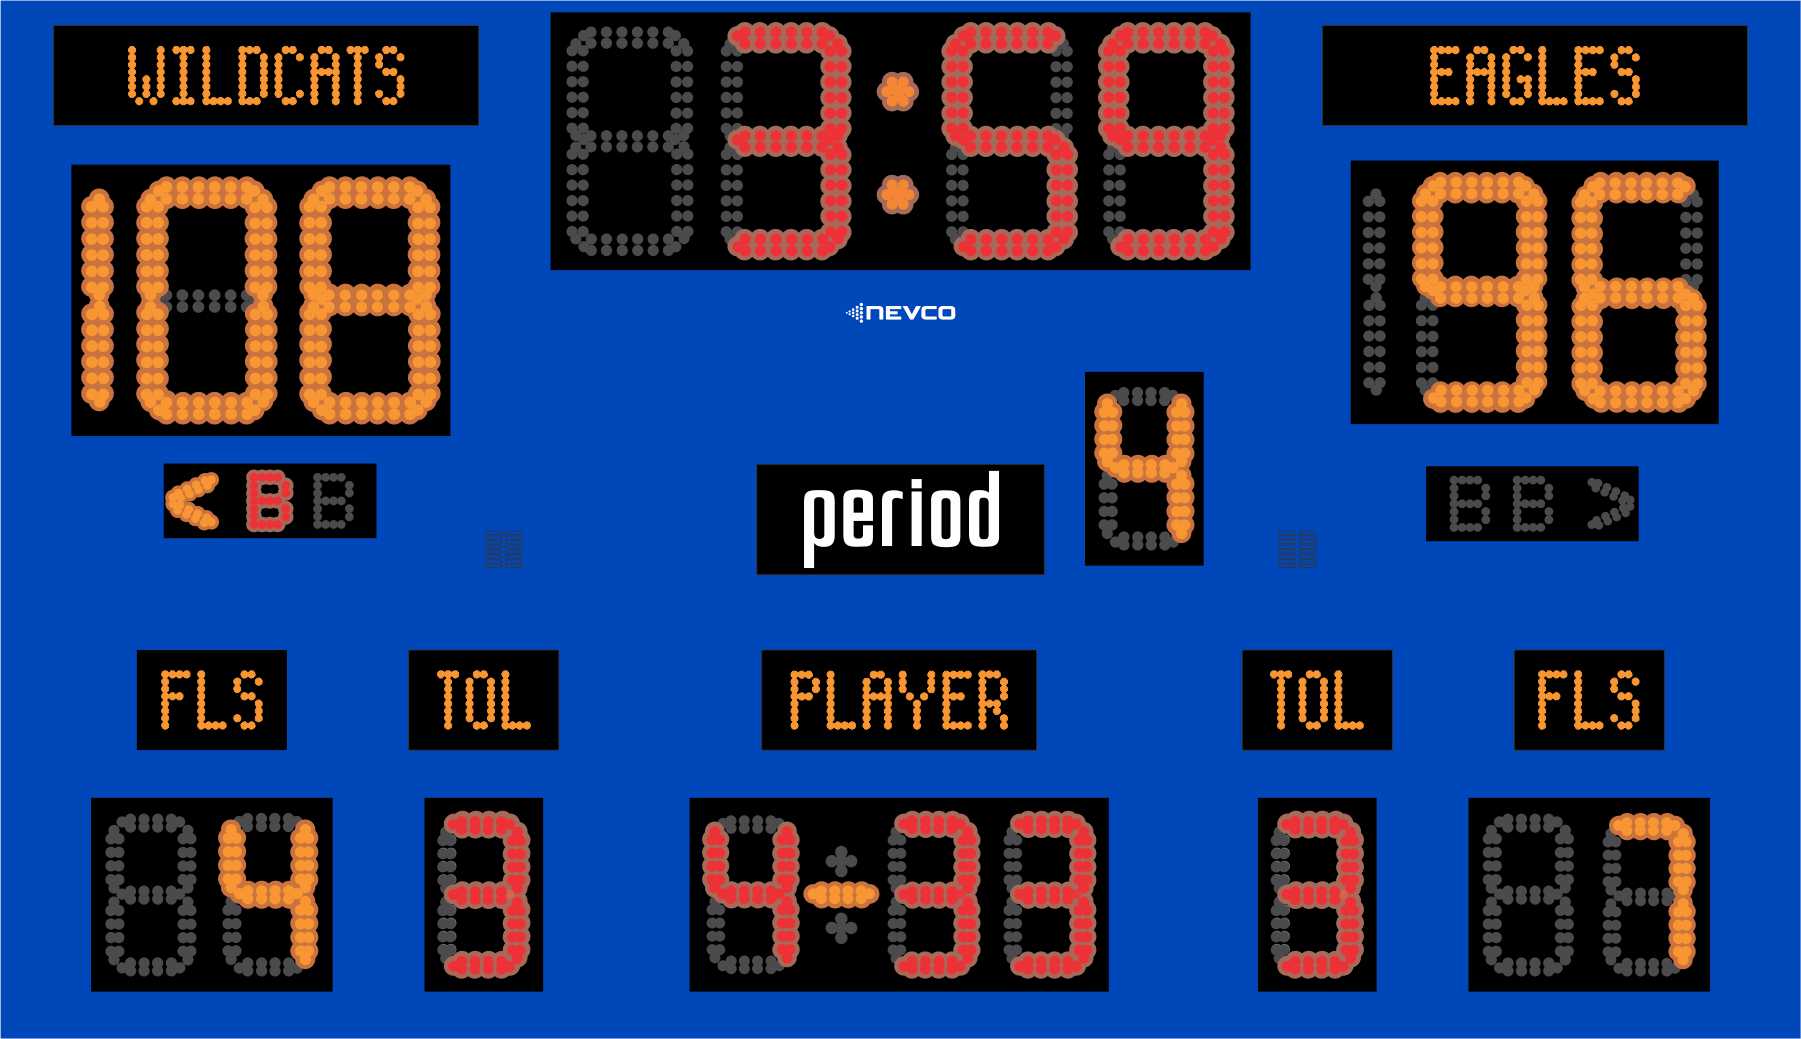 echtgenoot Stal Piepen Basketball Scoreboard With LED Digital Displays | Model 2785